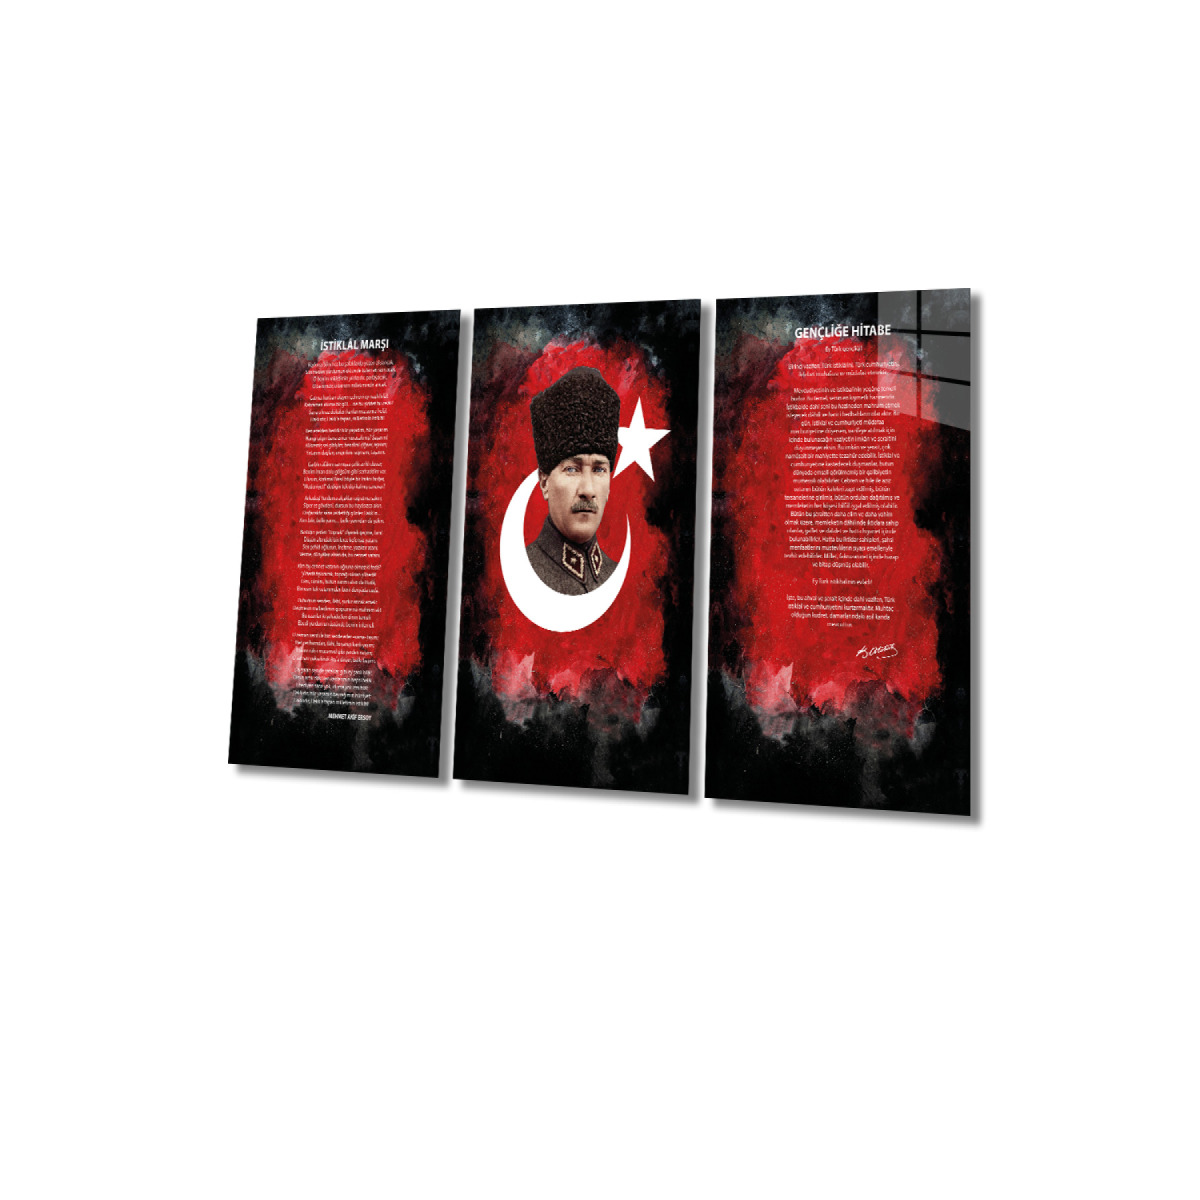 Atatürk - İstiklal Marşı - Gençliğe Hitabe (Toplam3 Parça)